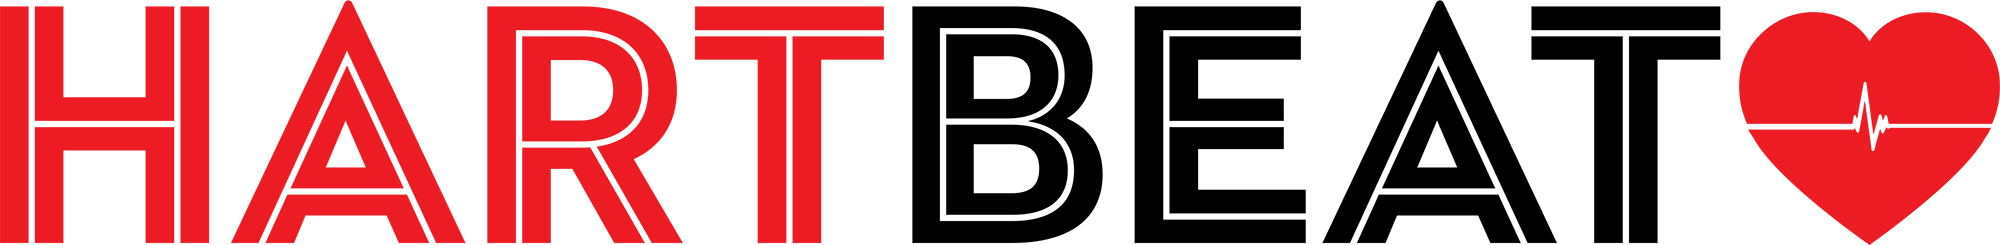 HartBeat Productions Logo